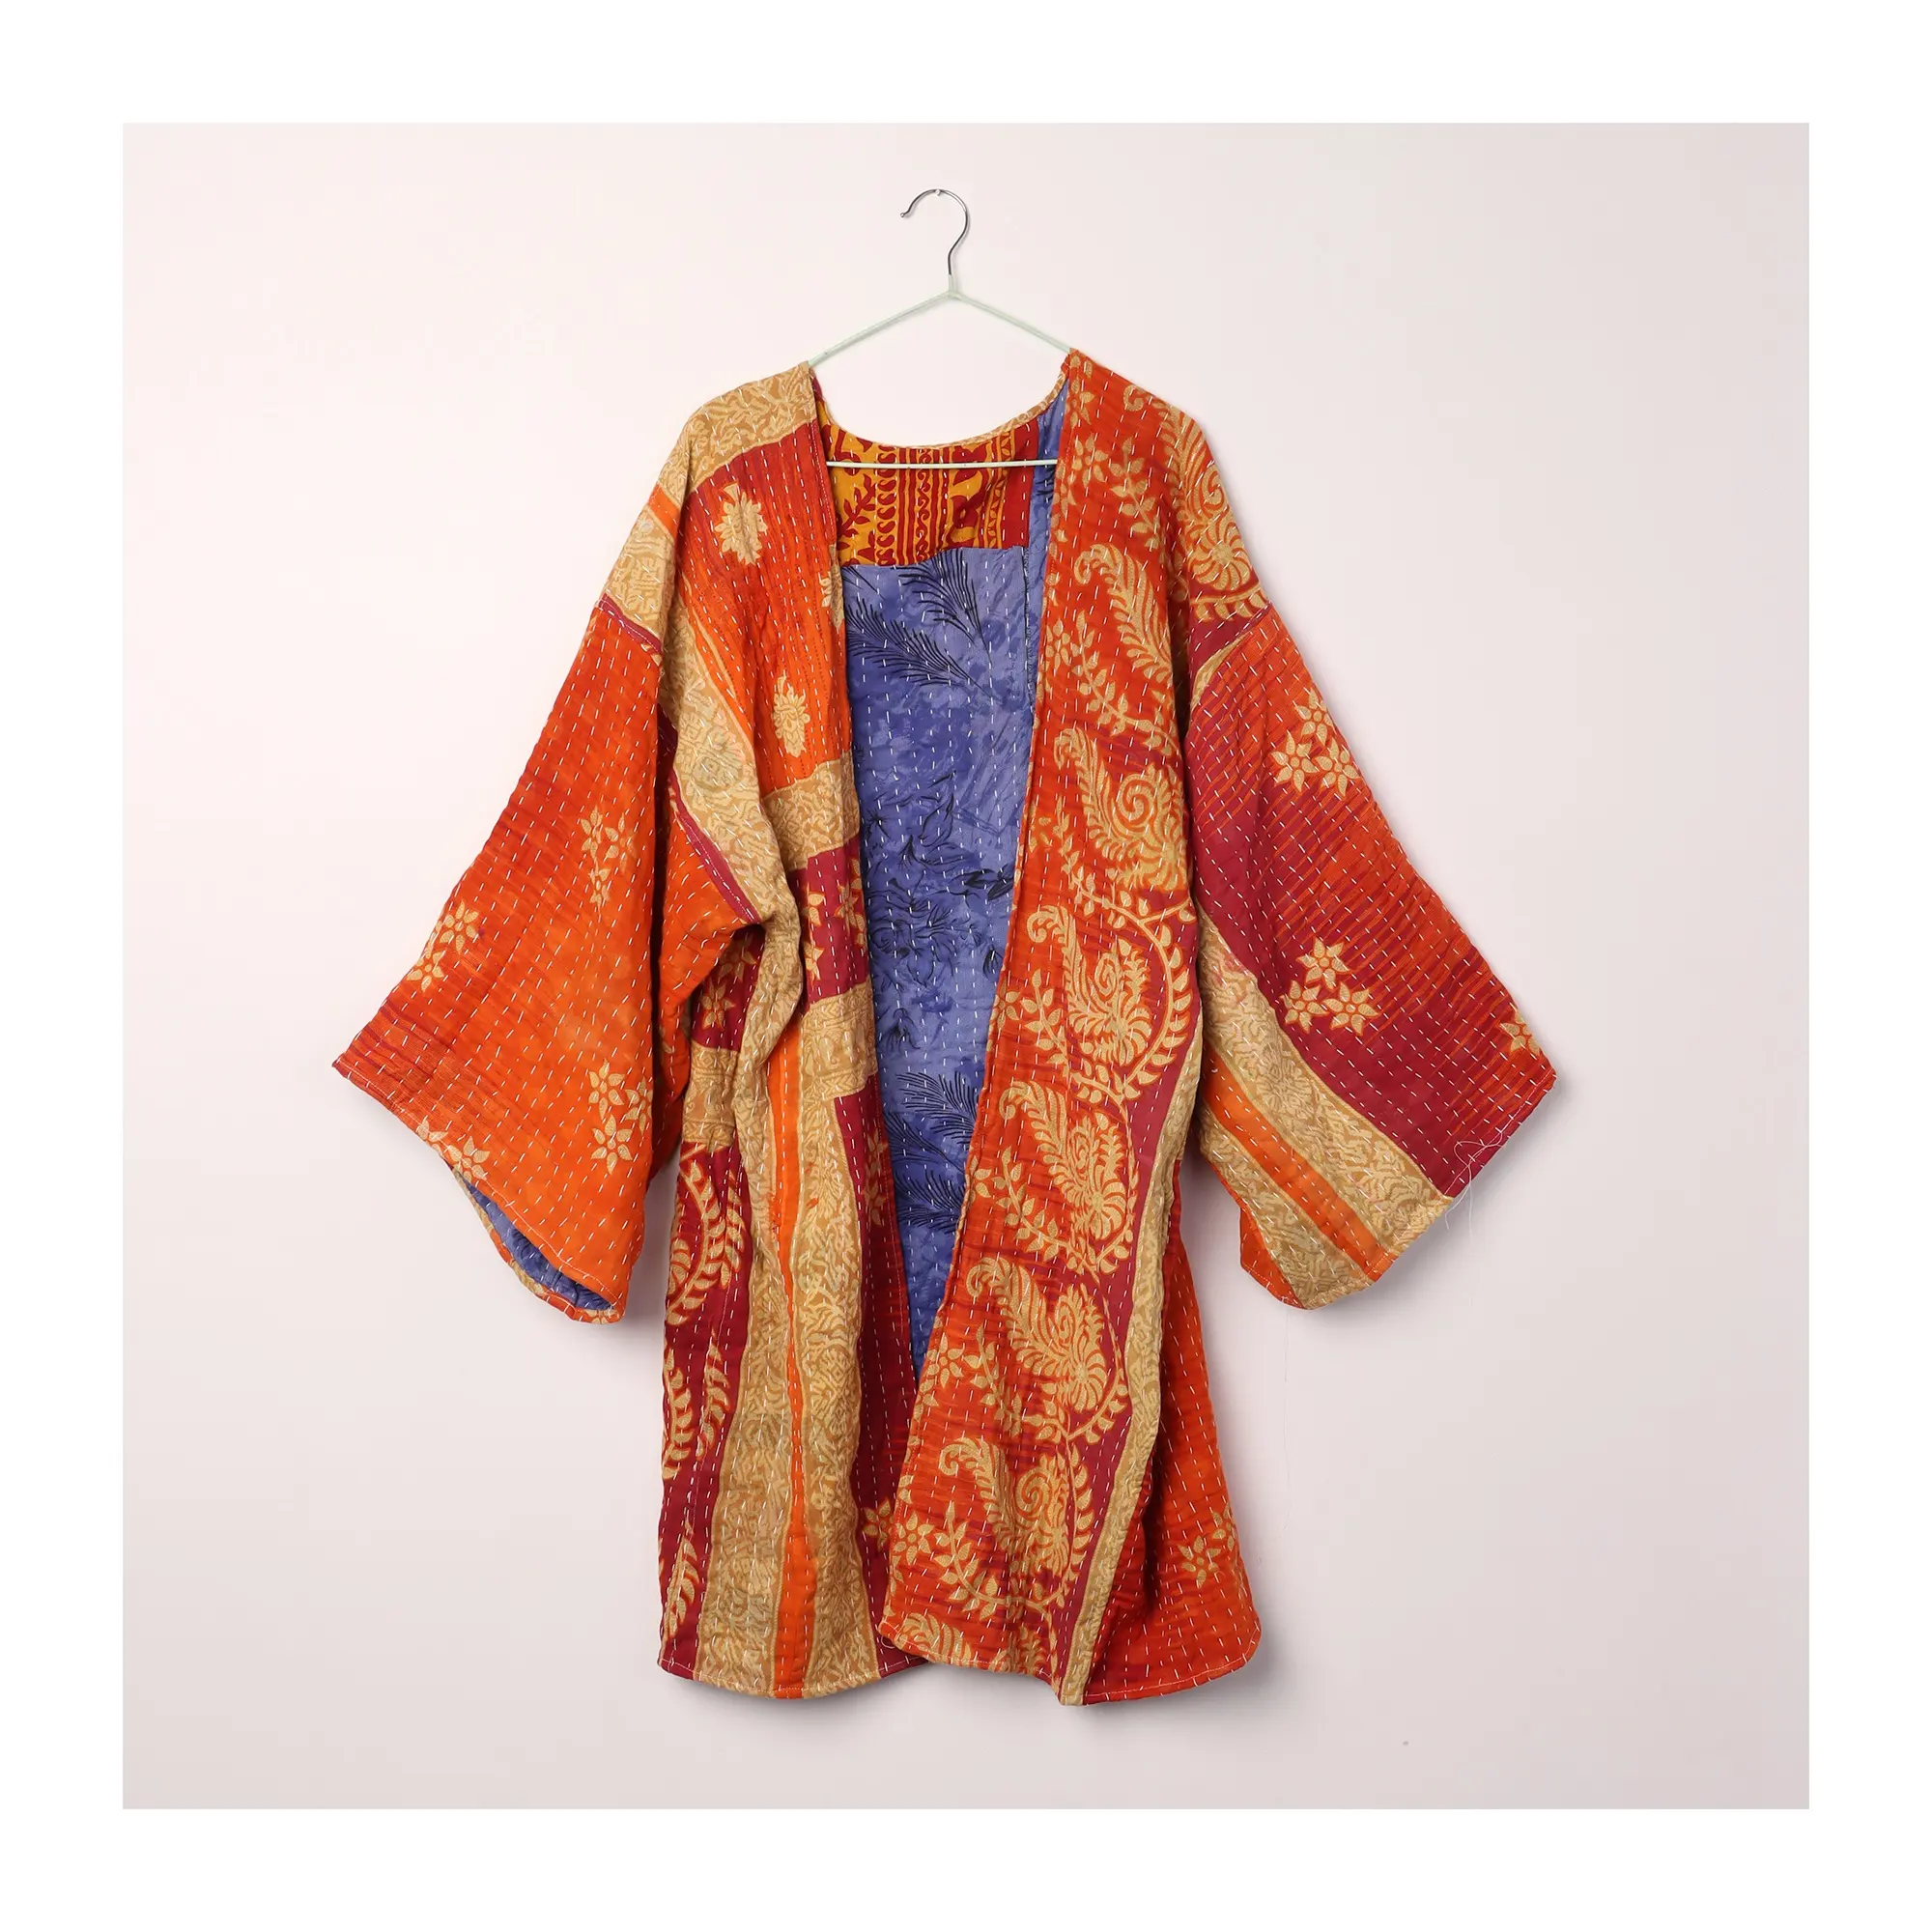 Kadın Kantha Kimono ceket Premium kalite Kantha Kimono ceket kadın bohemian vintage kantha el yapımı kimono ceket